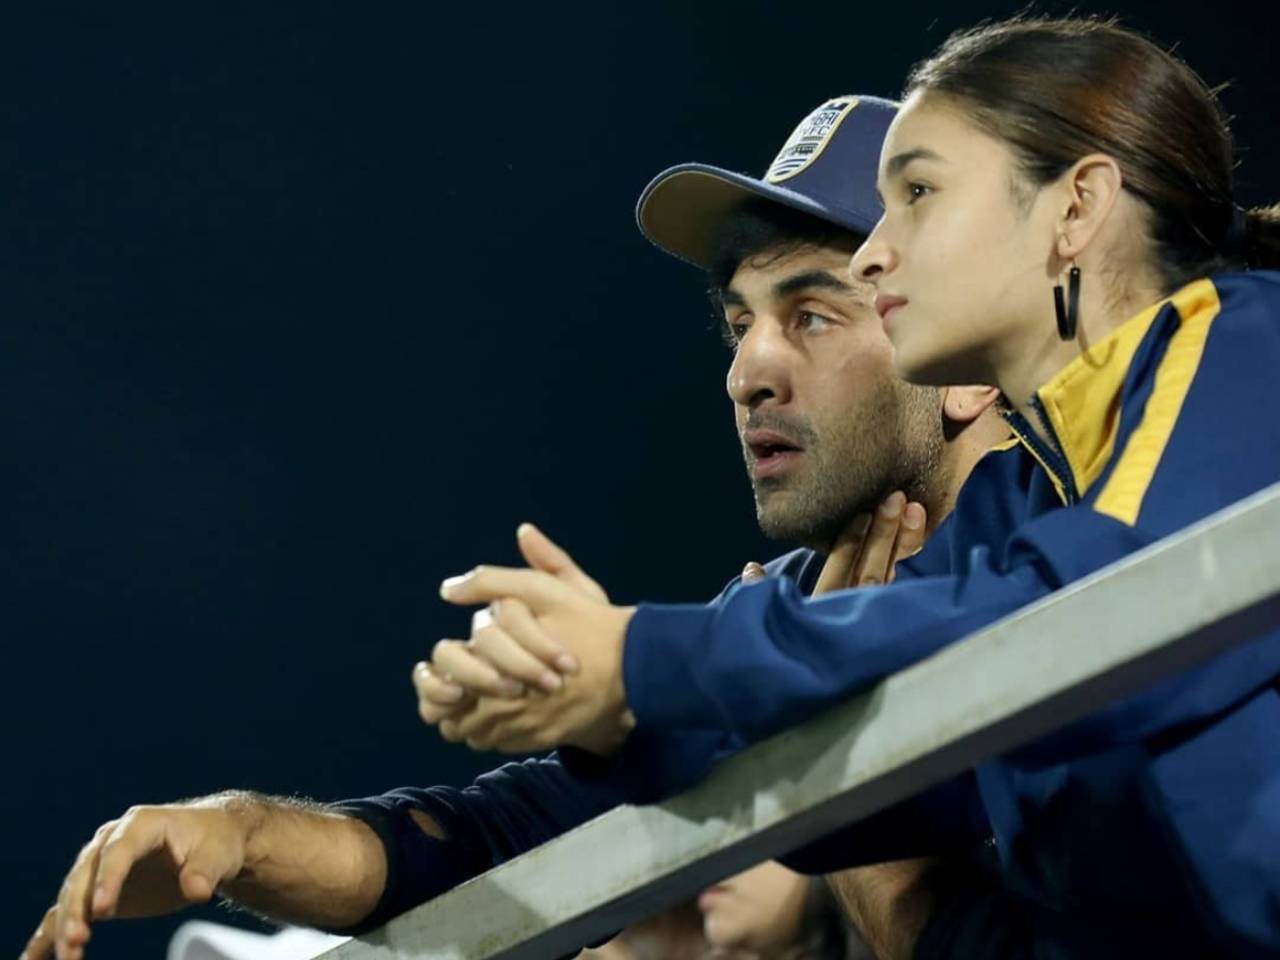 Amid ED summons, Ranbir Kapoor watches football match with Alia Bhatt,  couple sports matching '8' jersey. Watch